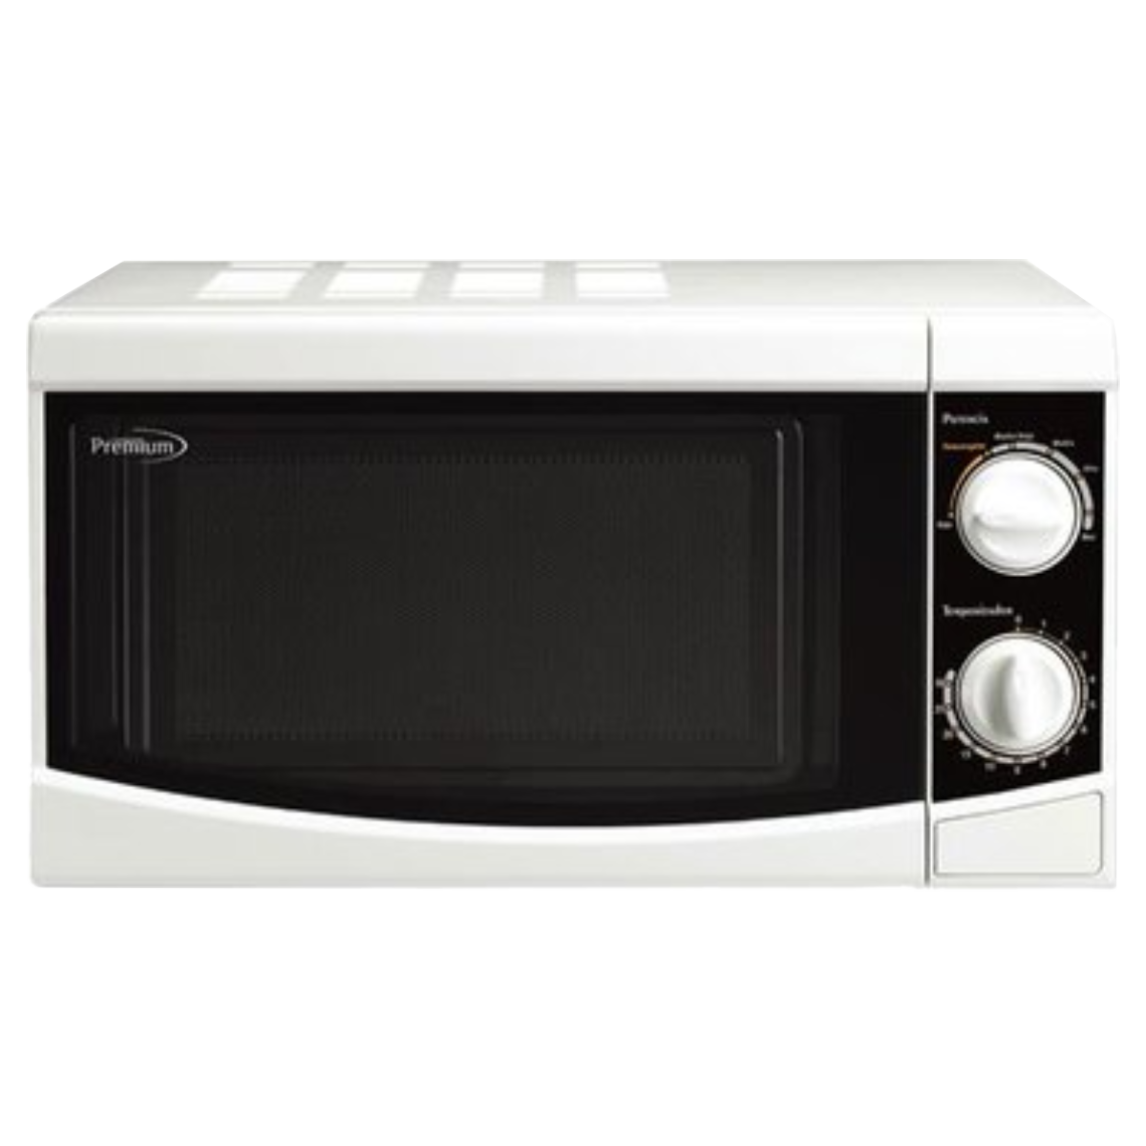 Premium - 0.7 CuFt 700 Watt White Countertop Microwave Oven